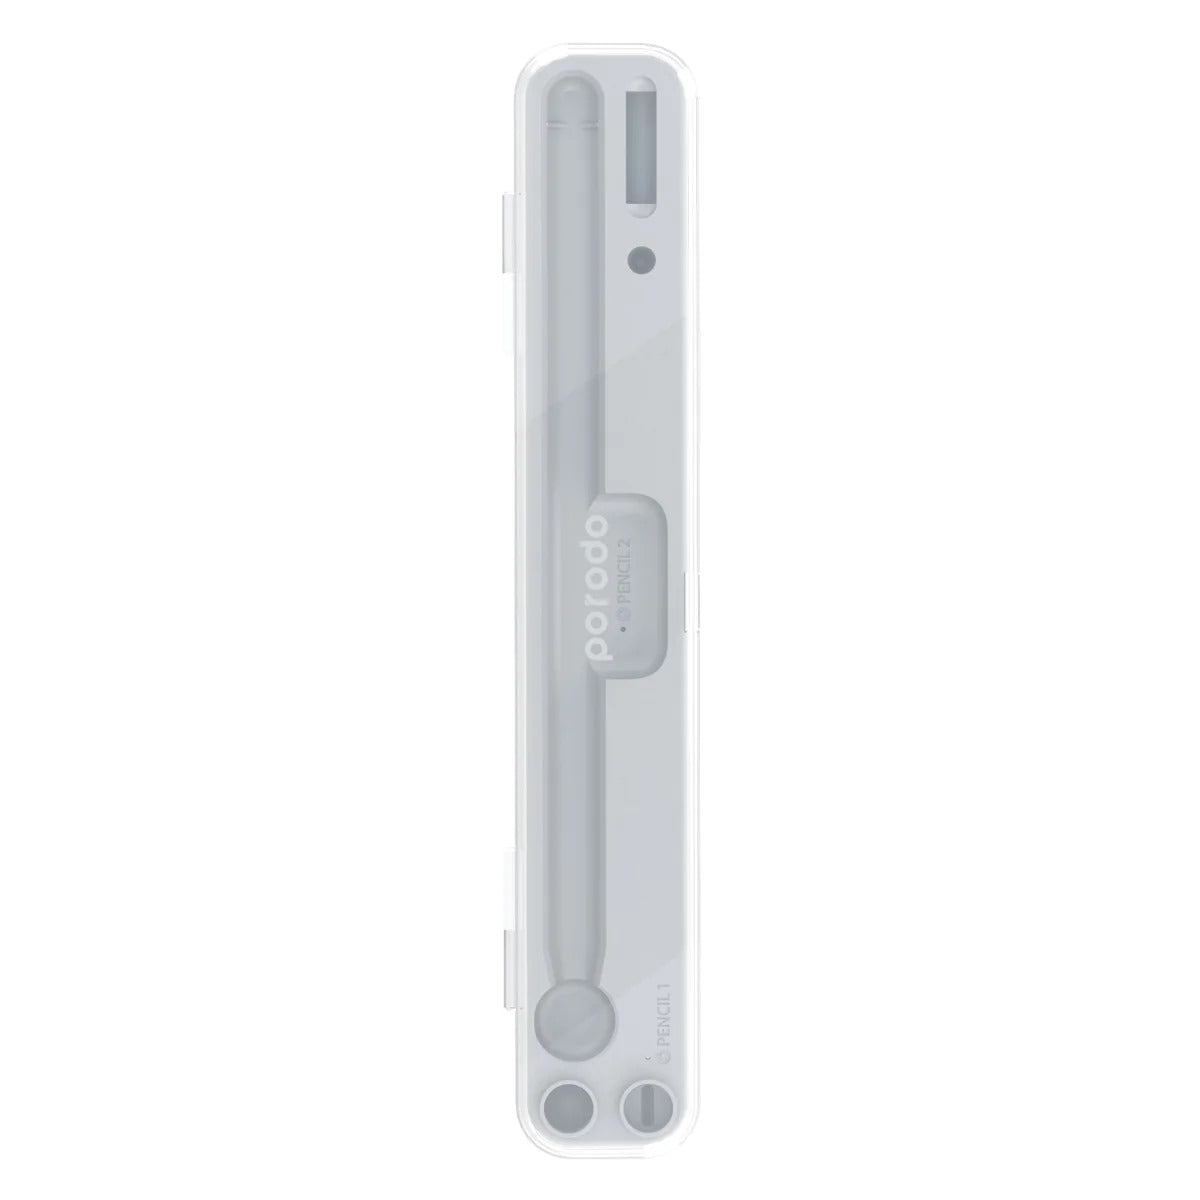 Porodo Wireless Charging & Storage For Pencil 1&2 Case - White